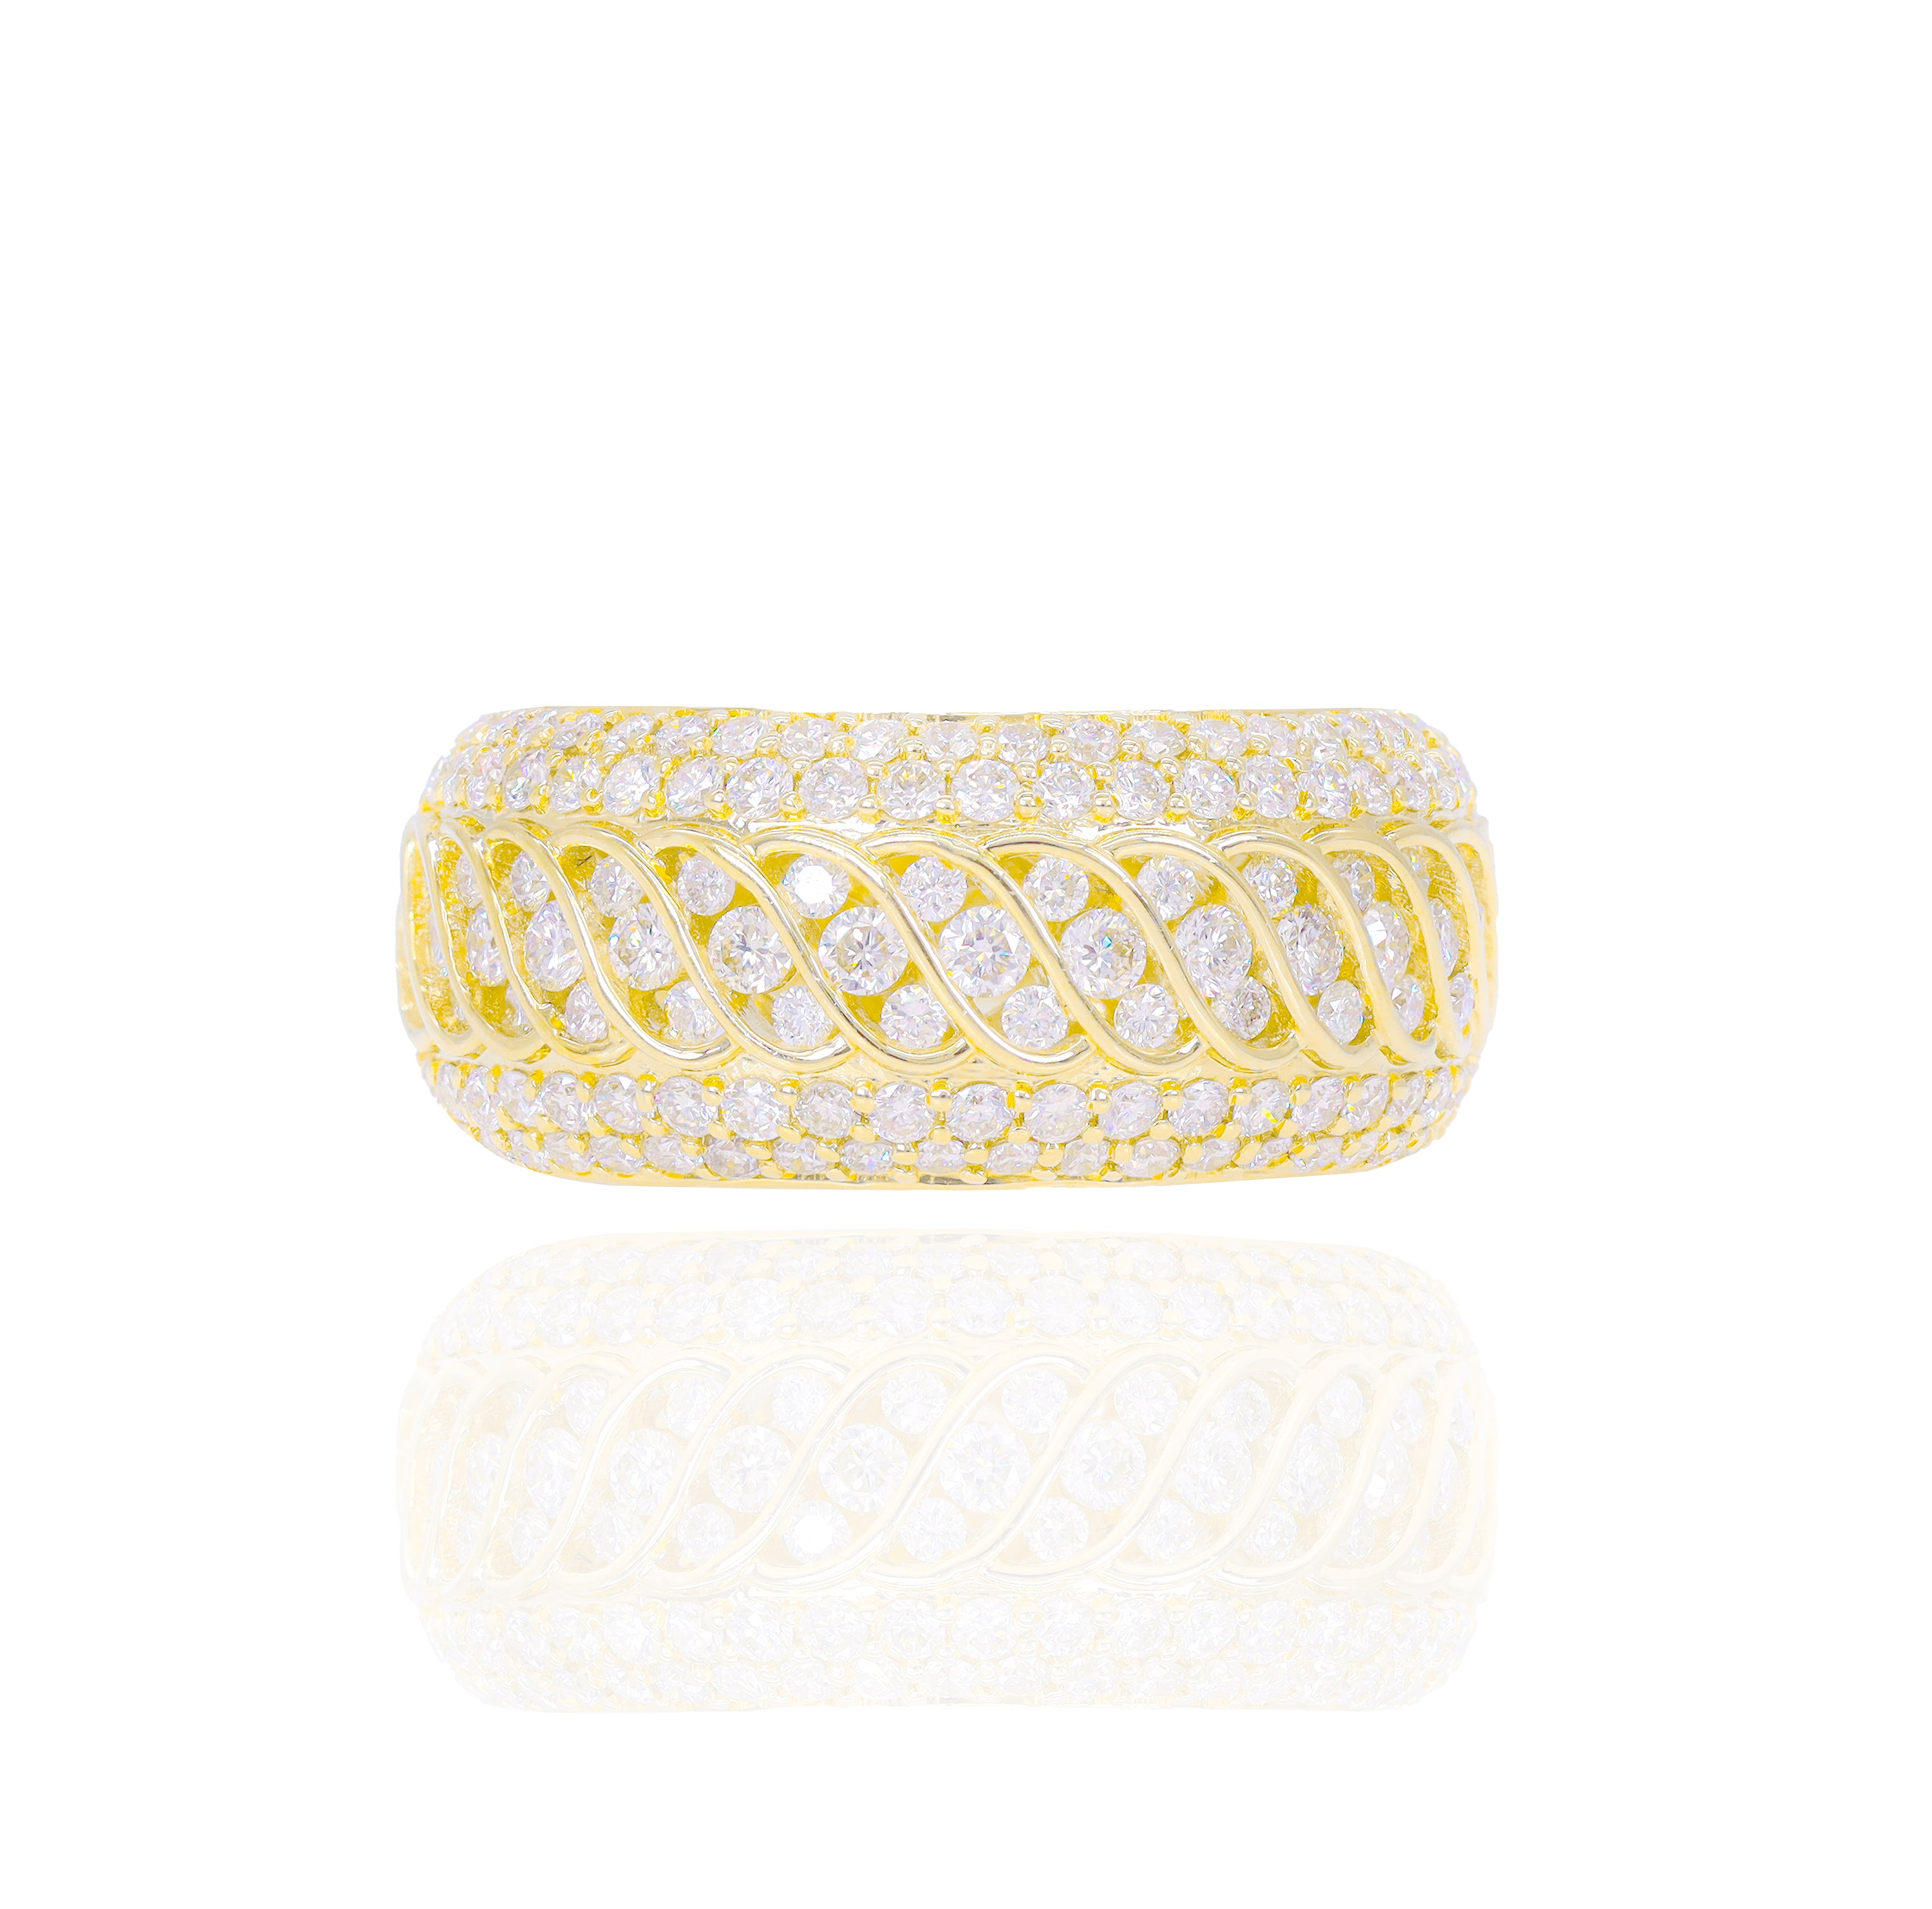 Spiral Design Chanel Set Diamond Ring Band